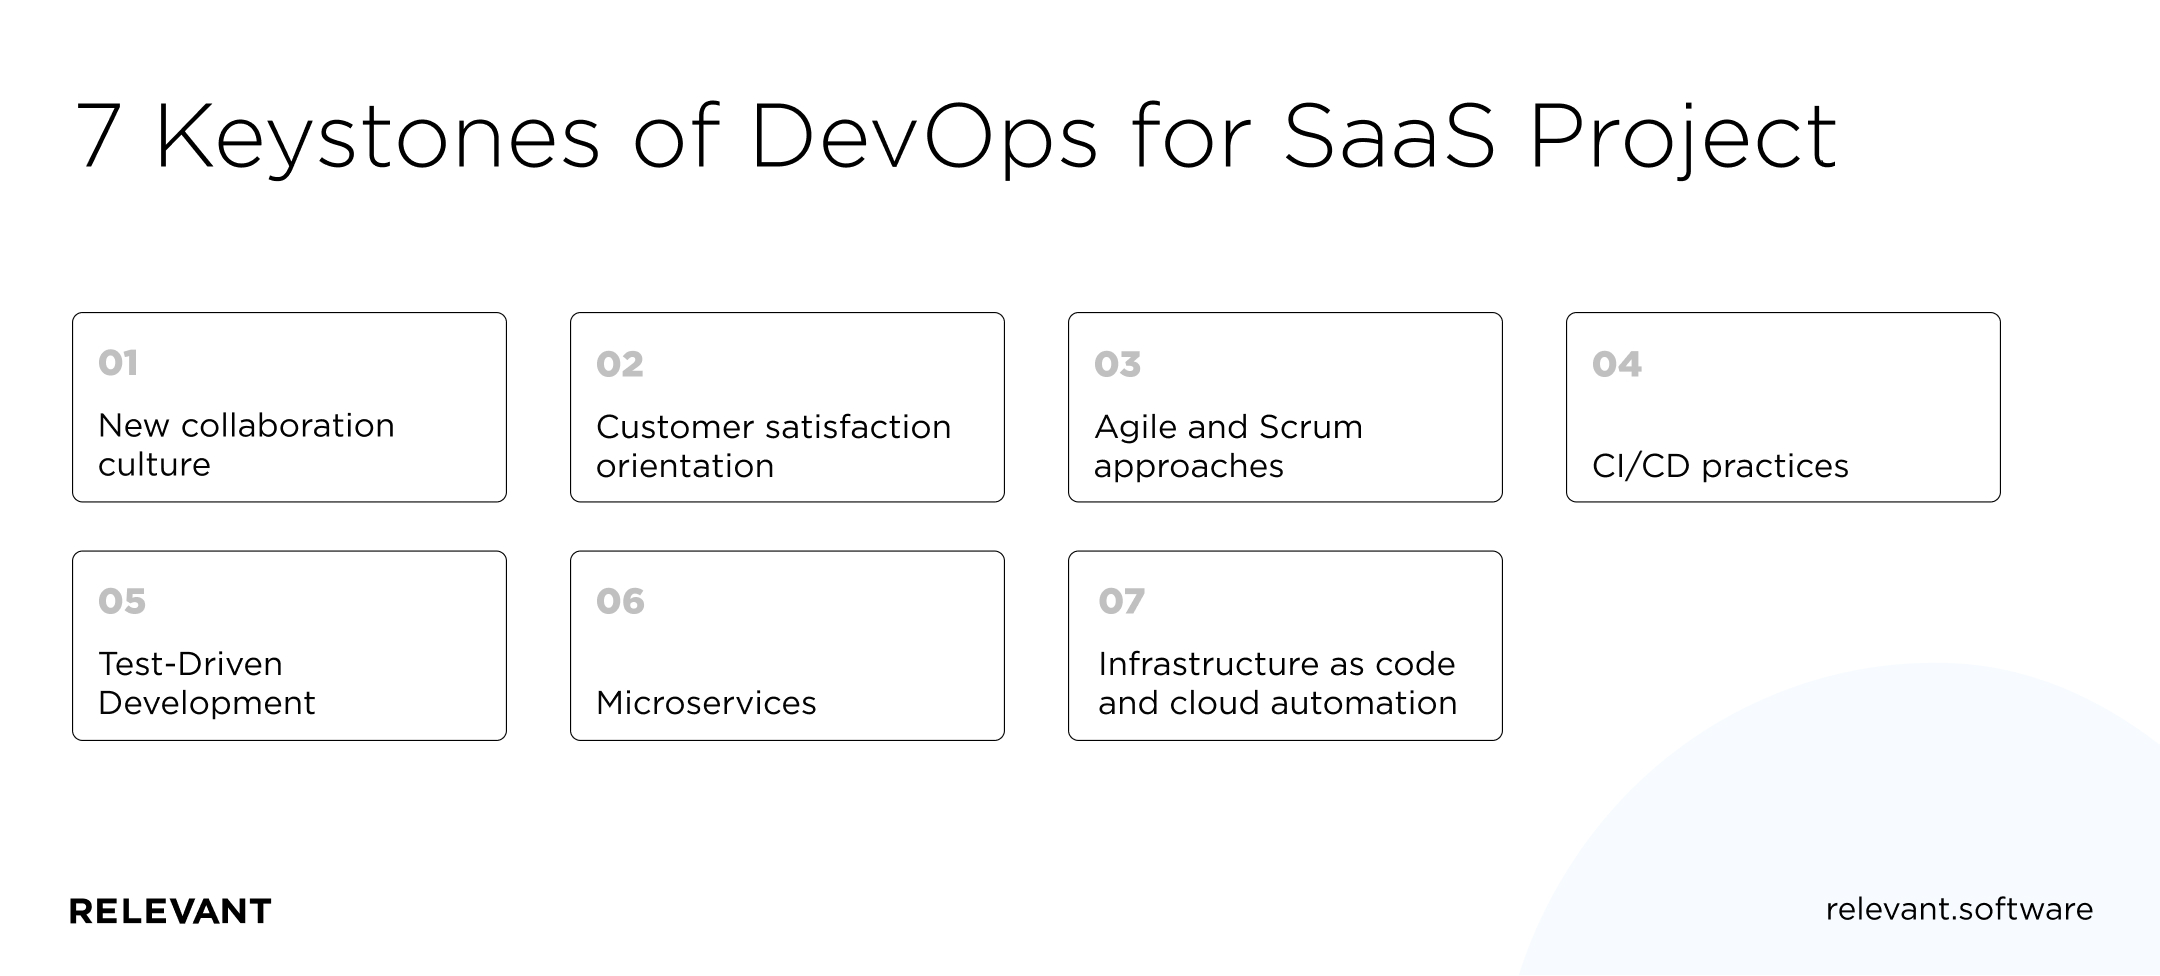 7 Keystones of DevOps for SaaS Project